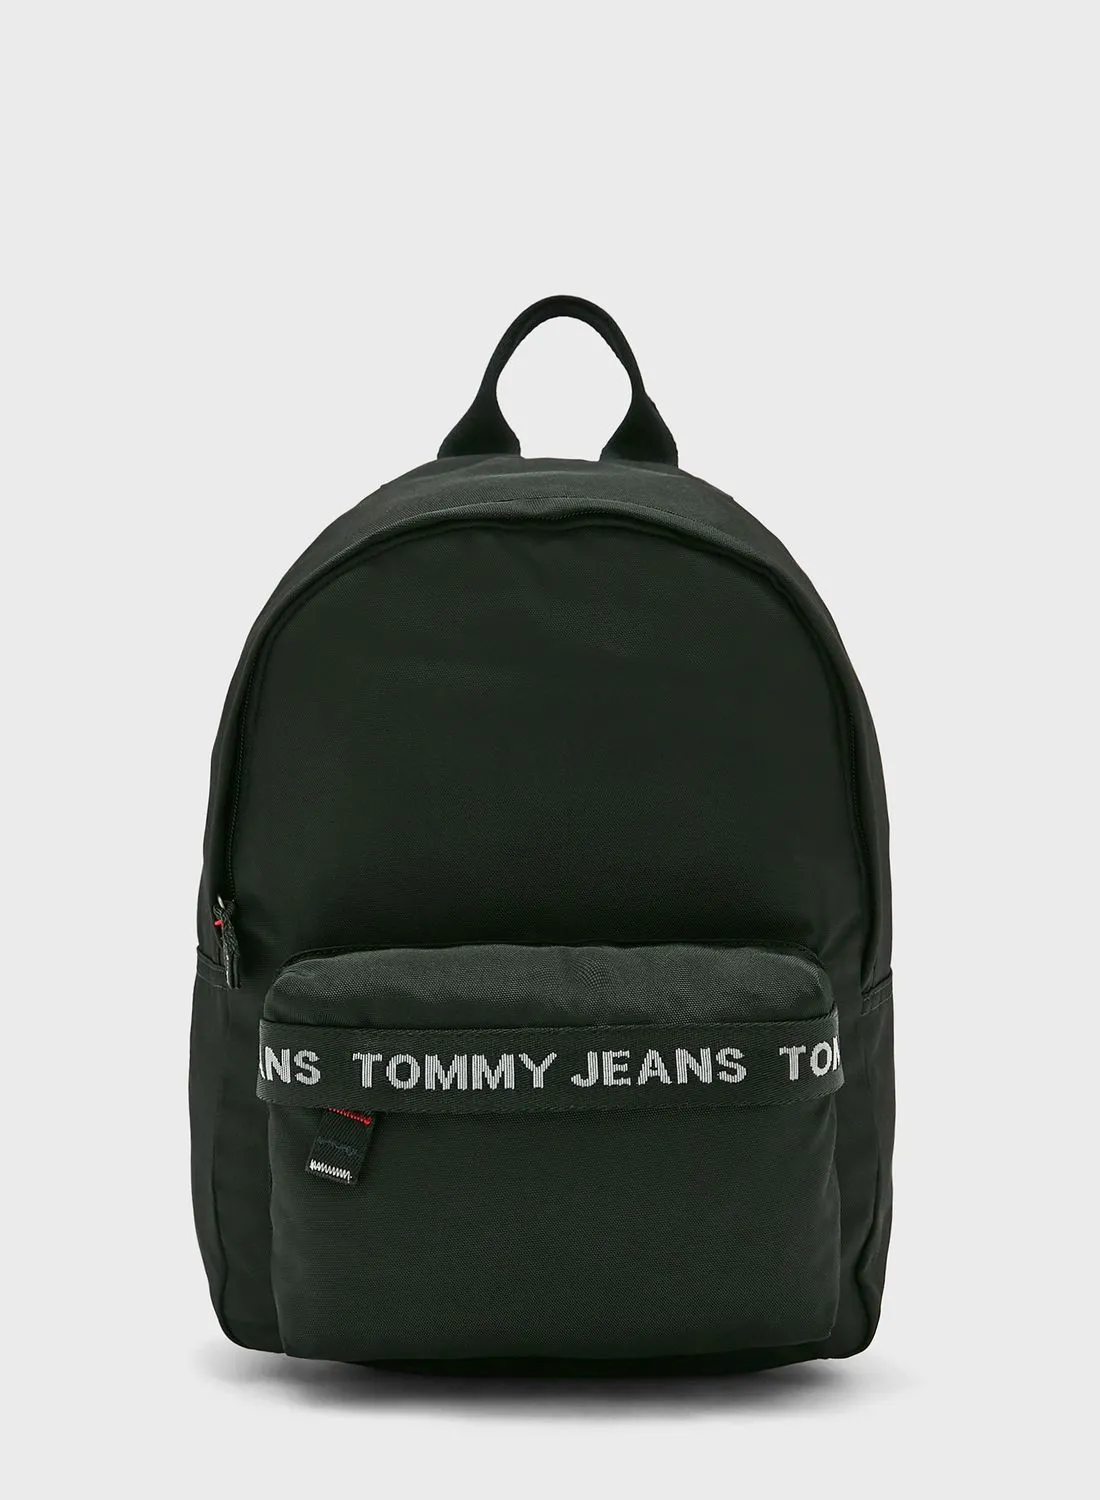 TOMMY HILFIGER Essentials Top Handle Backpack